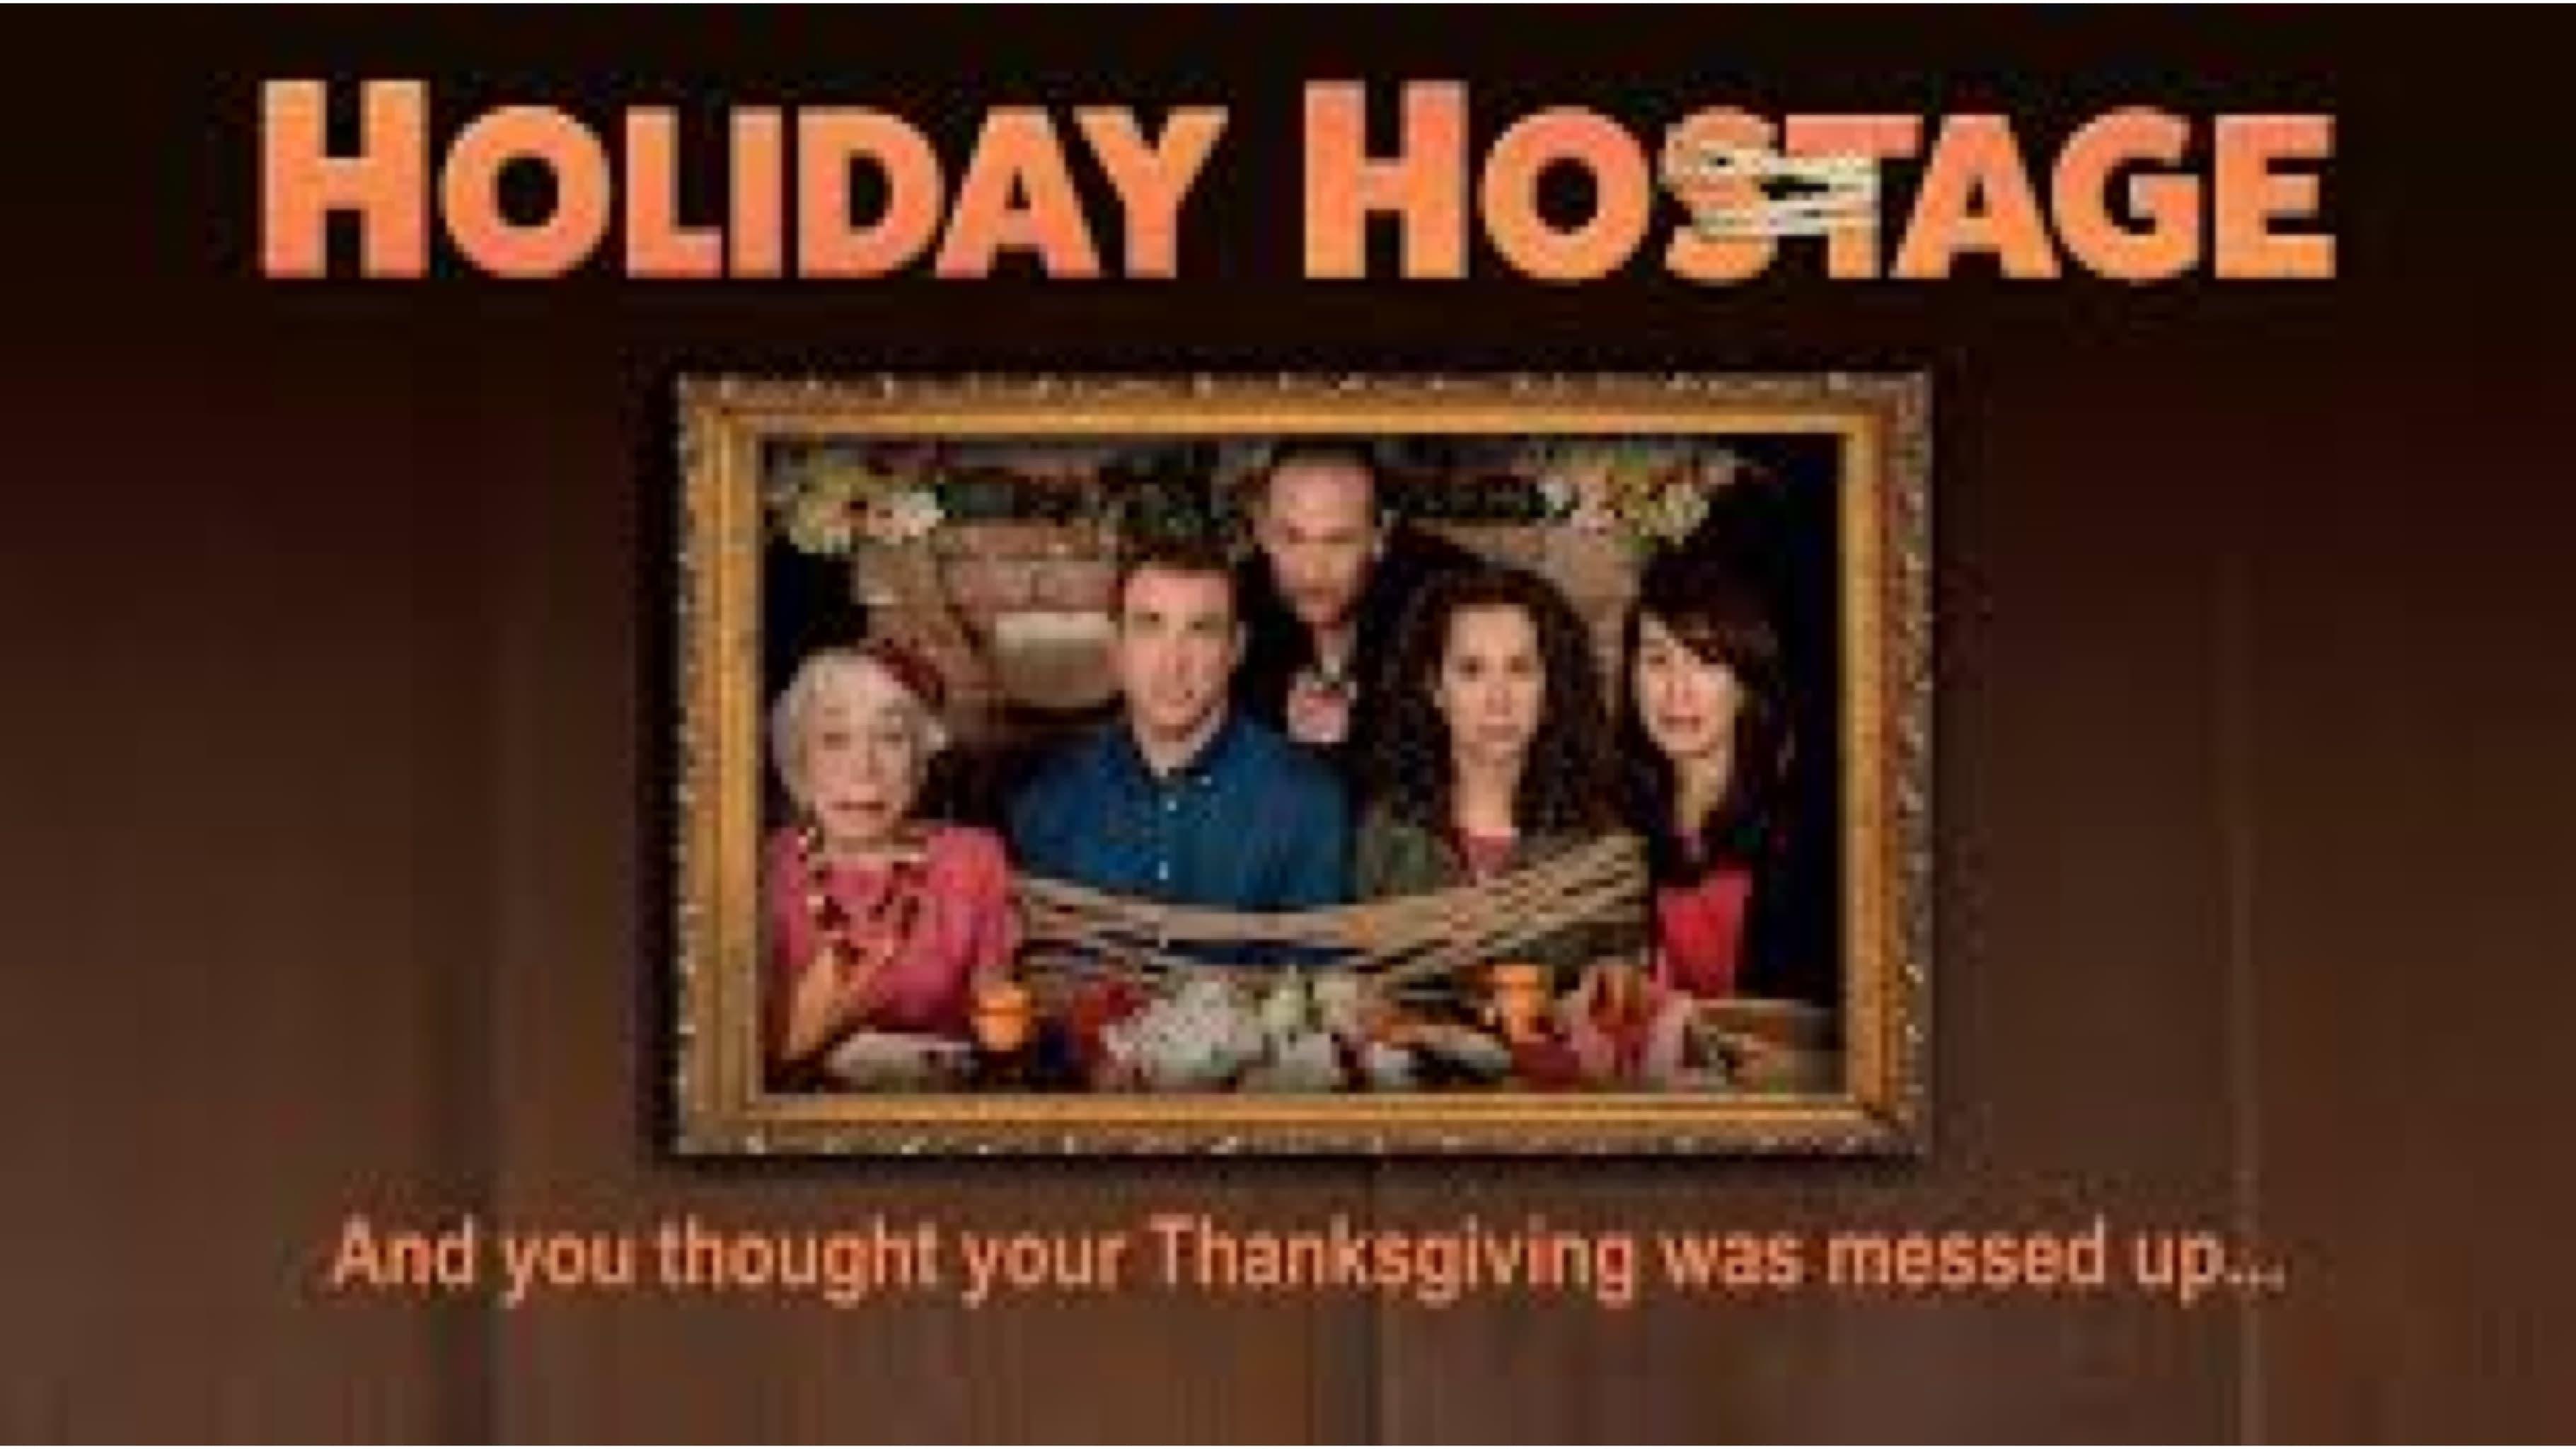 Holiday Hostage backdrop